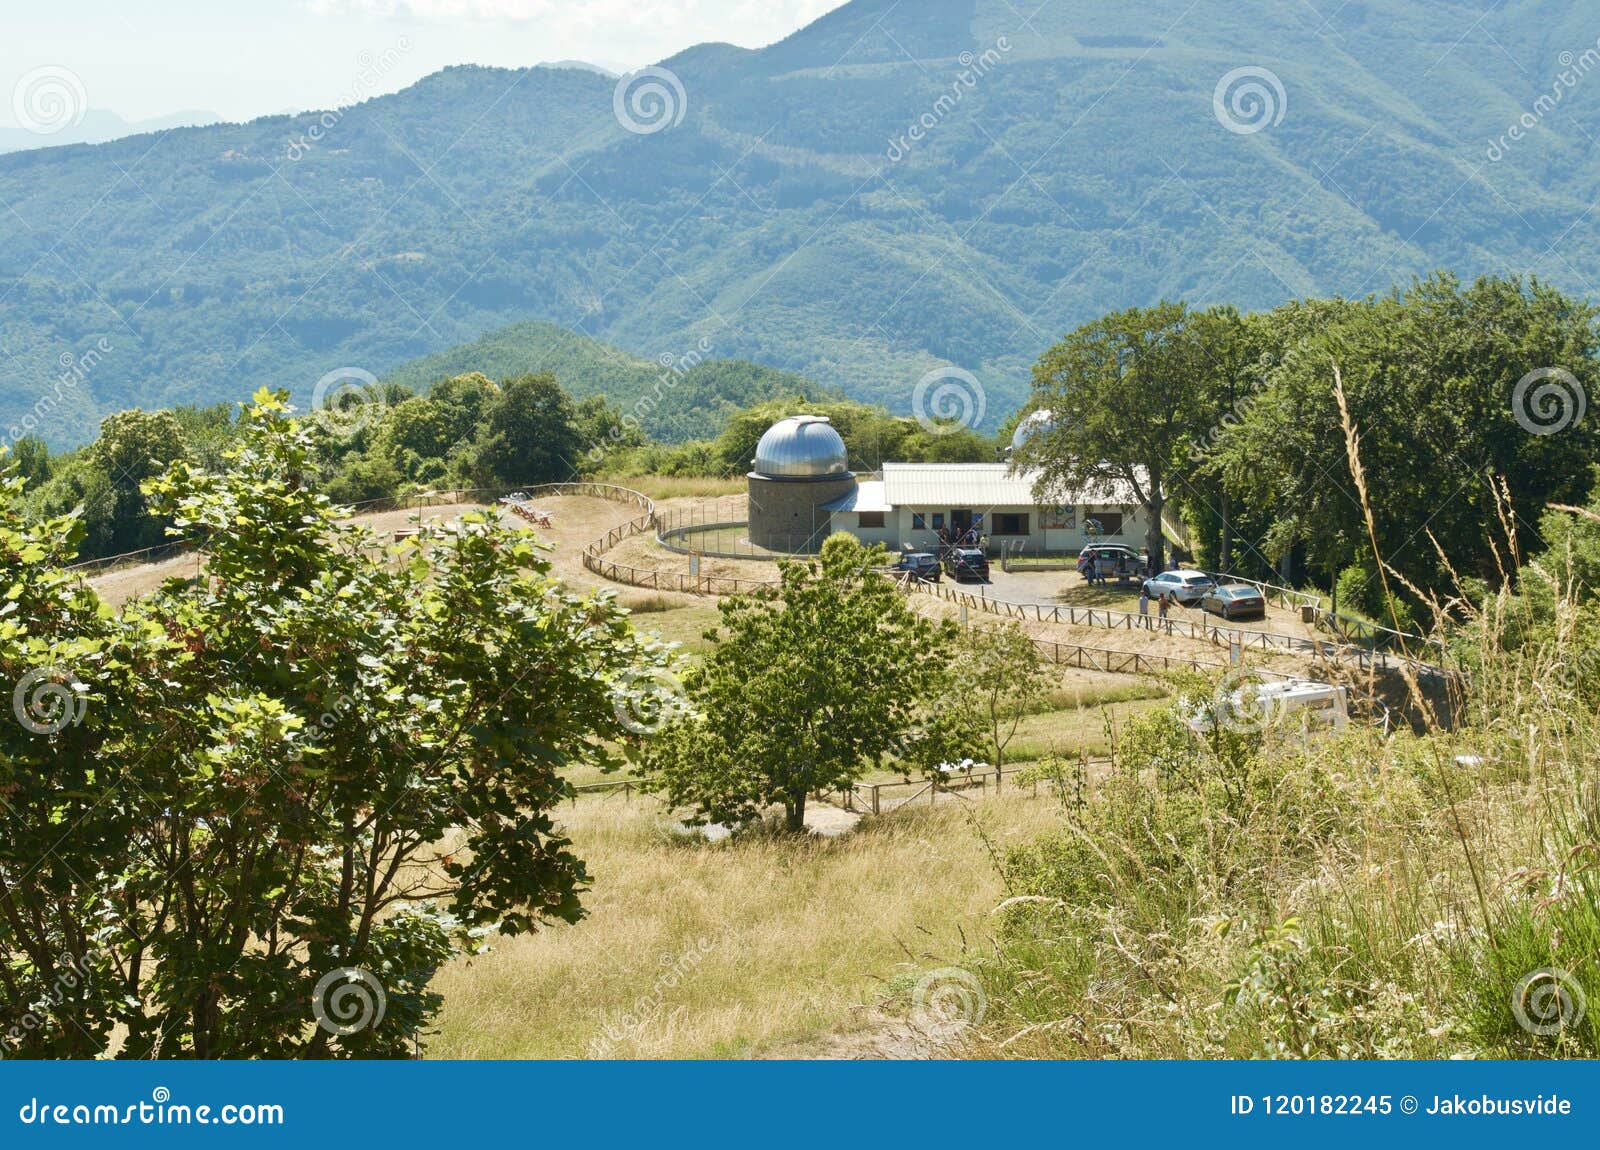 astronomic observatory in san marcello, pistoia, italy